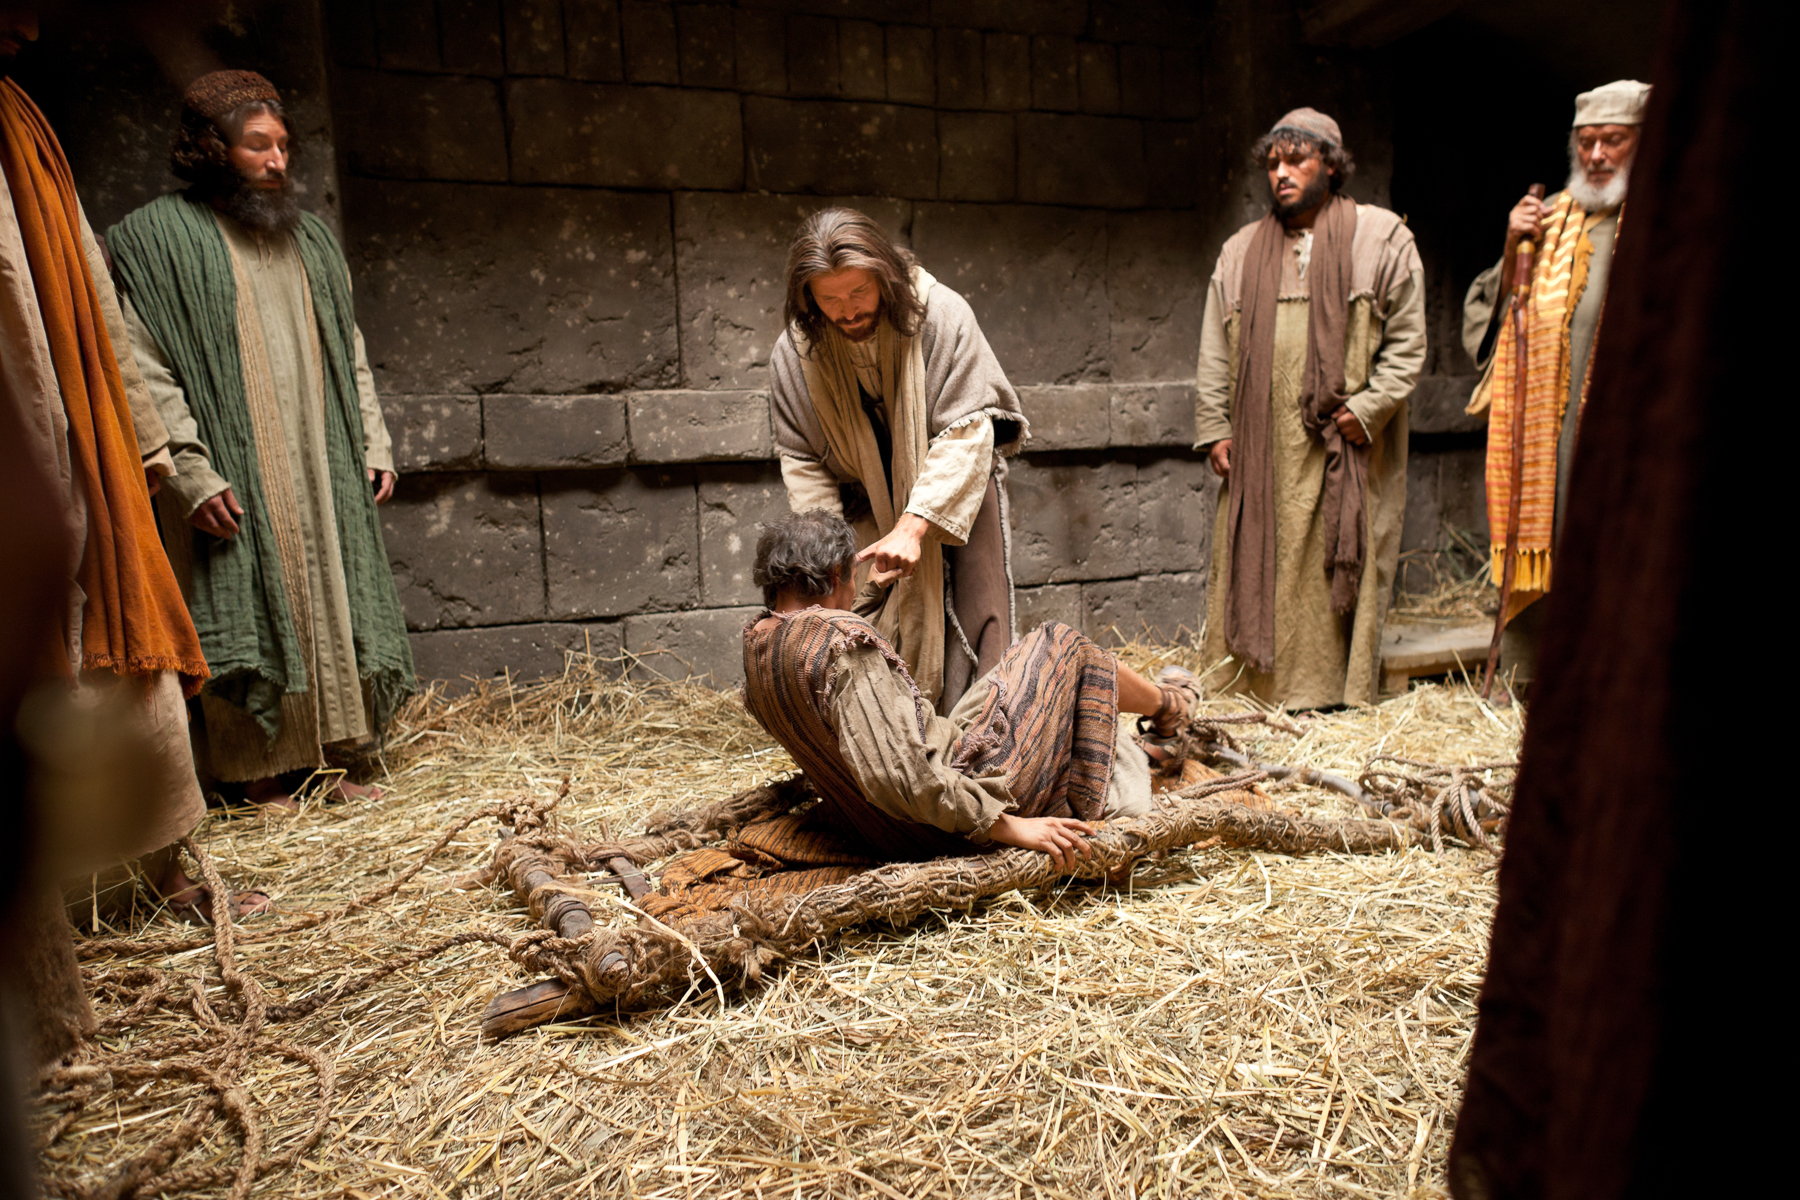 34_jesus-forgives-sins-and-heals-a-man-stricken-with-palsy_1800x1200_300dpi_3